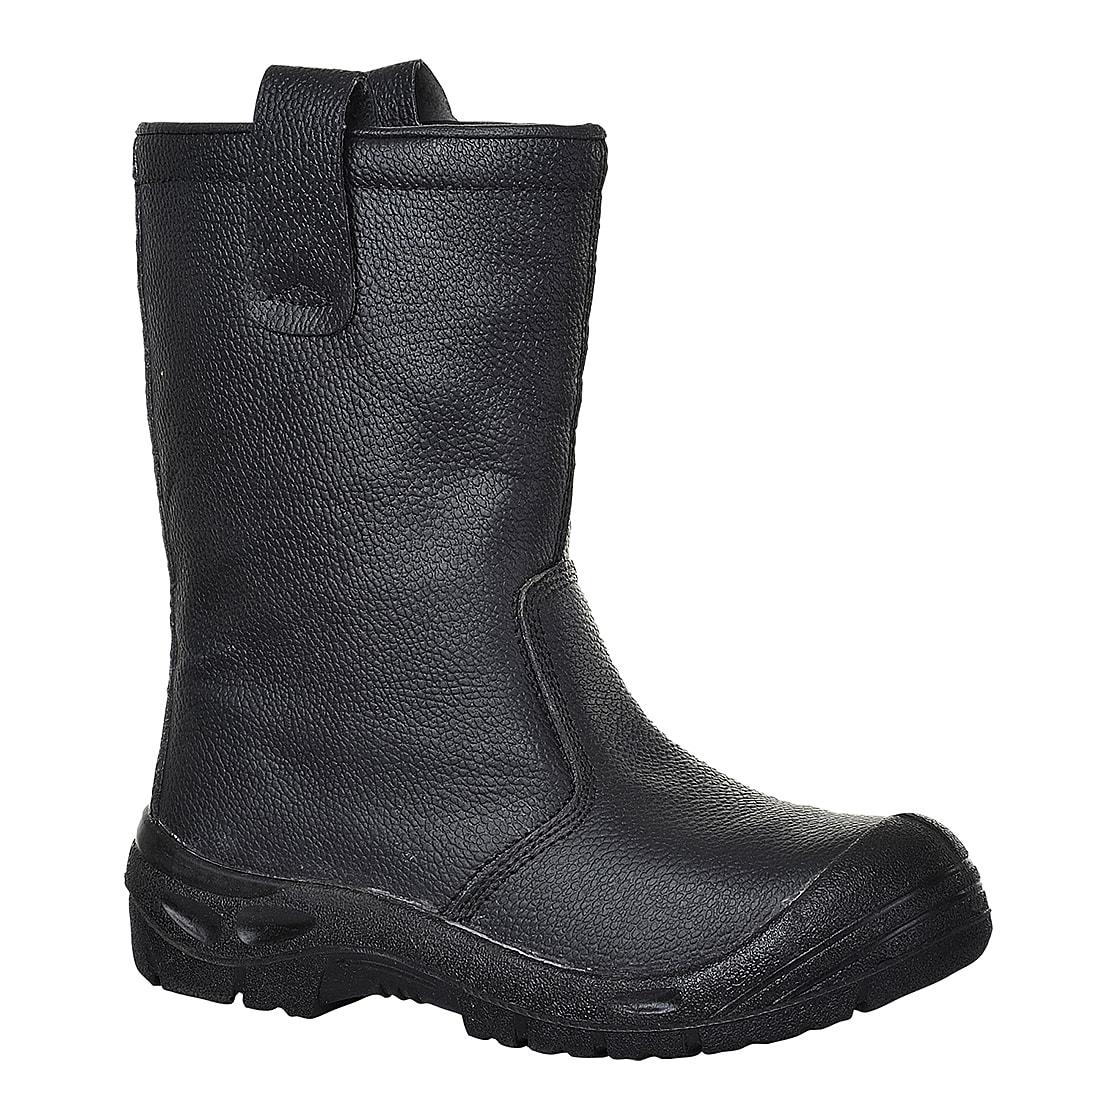 Portwest Steelite Rigger Boots with Scuff Cap S3 CI in Black (Product Code: FW29)